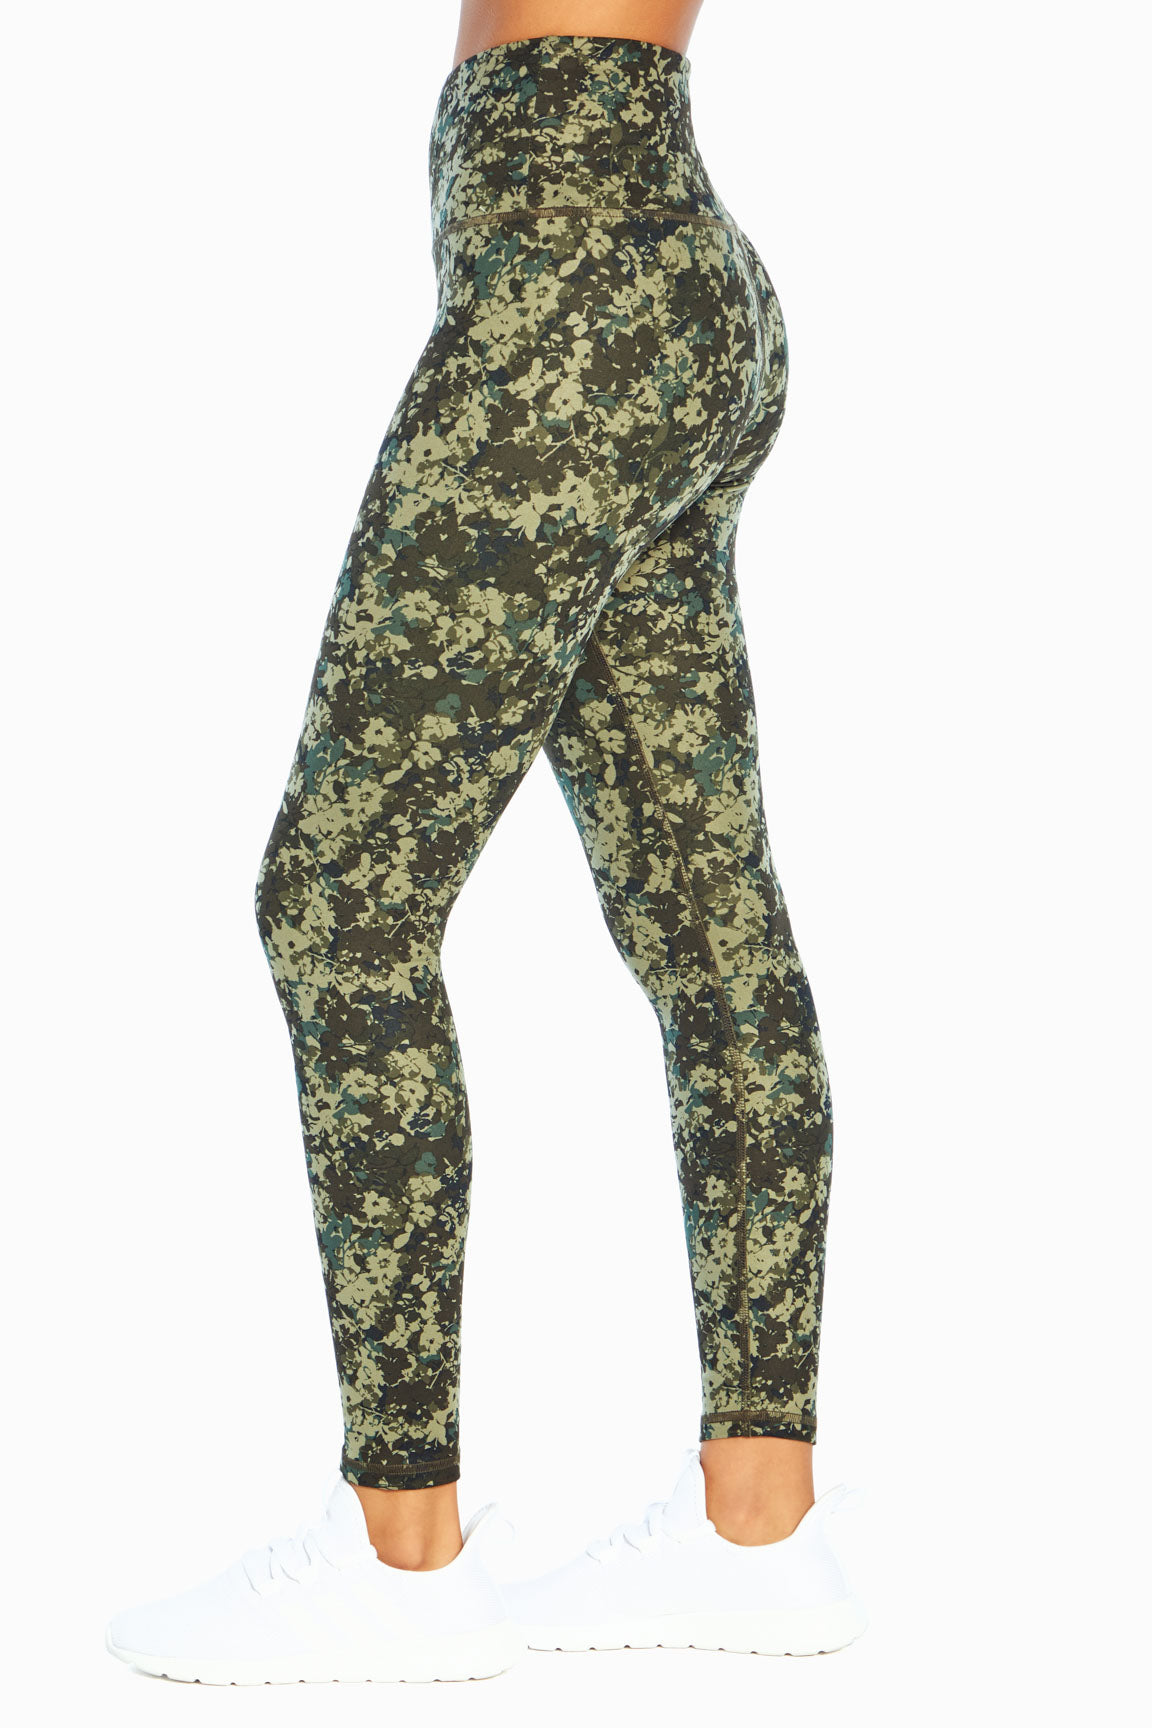 LMB Capri Leggings for Women Buttery Soft Polyester Fabric, Khaki, XL - 3XL  